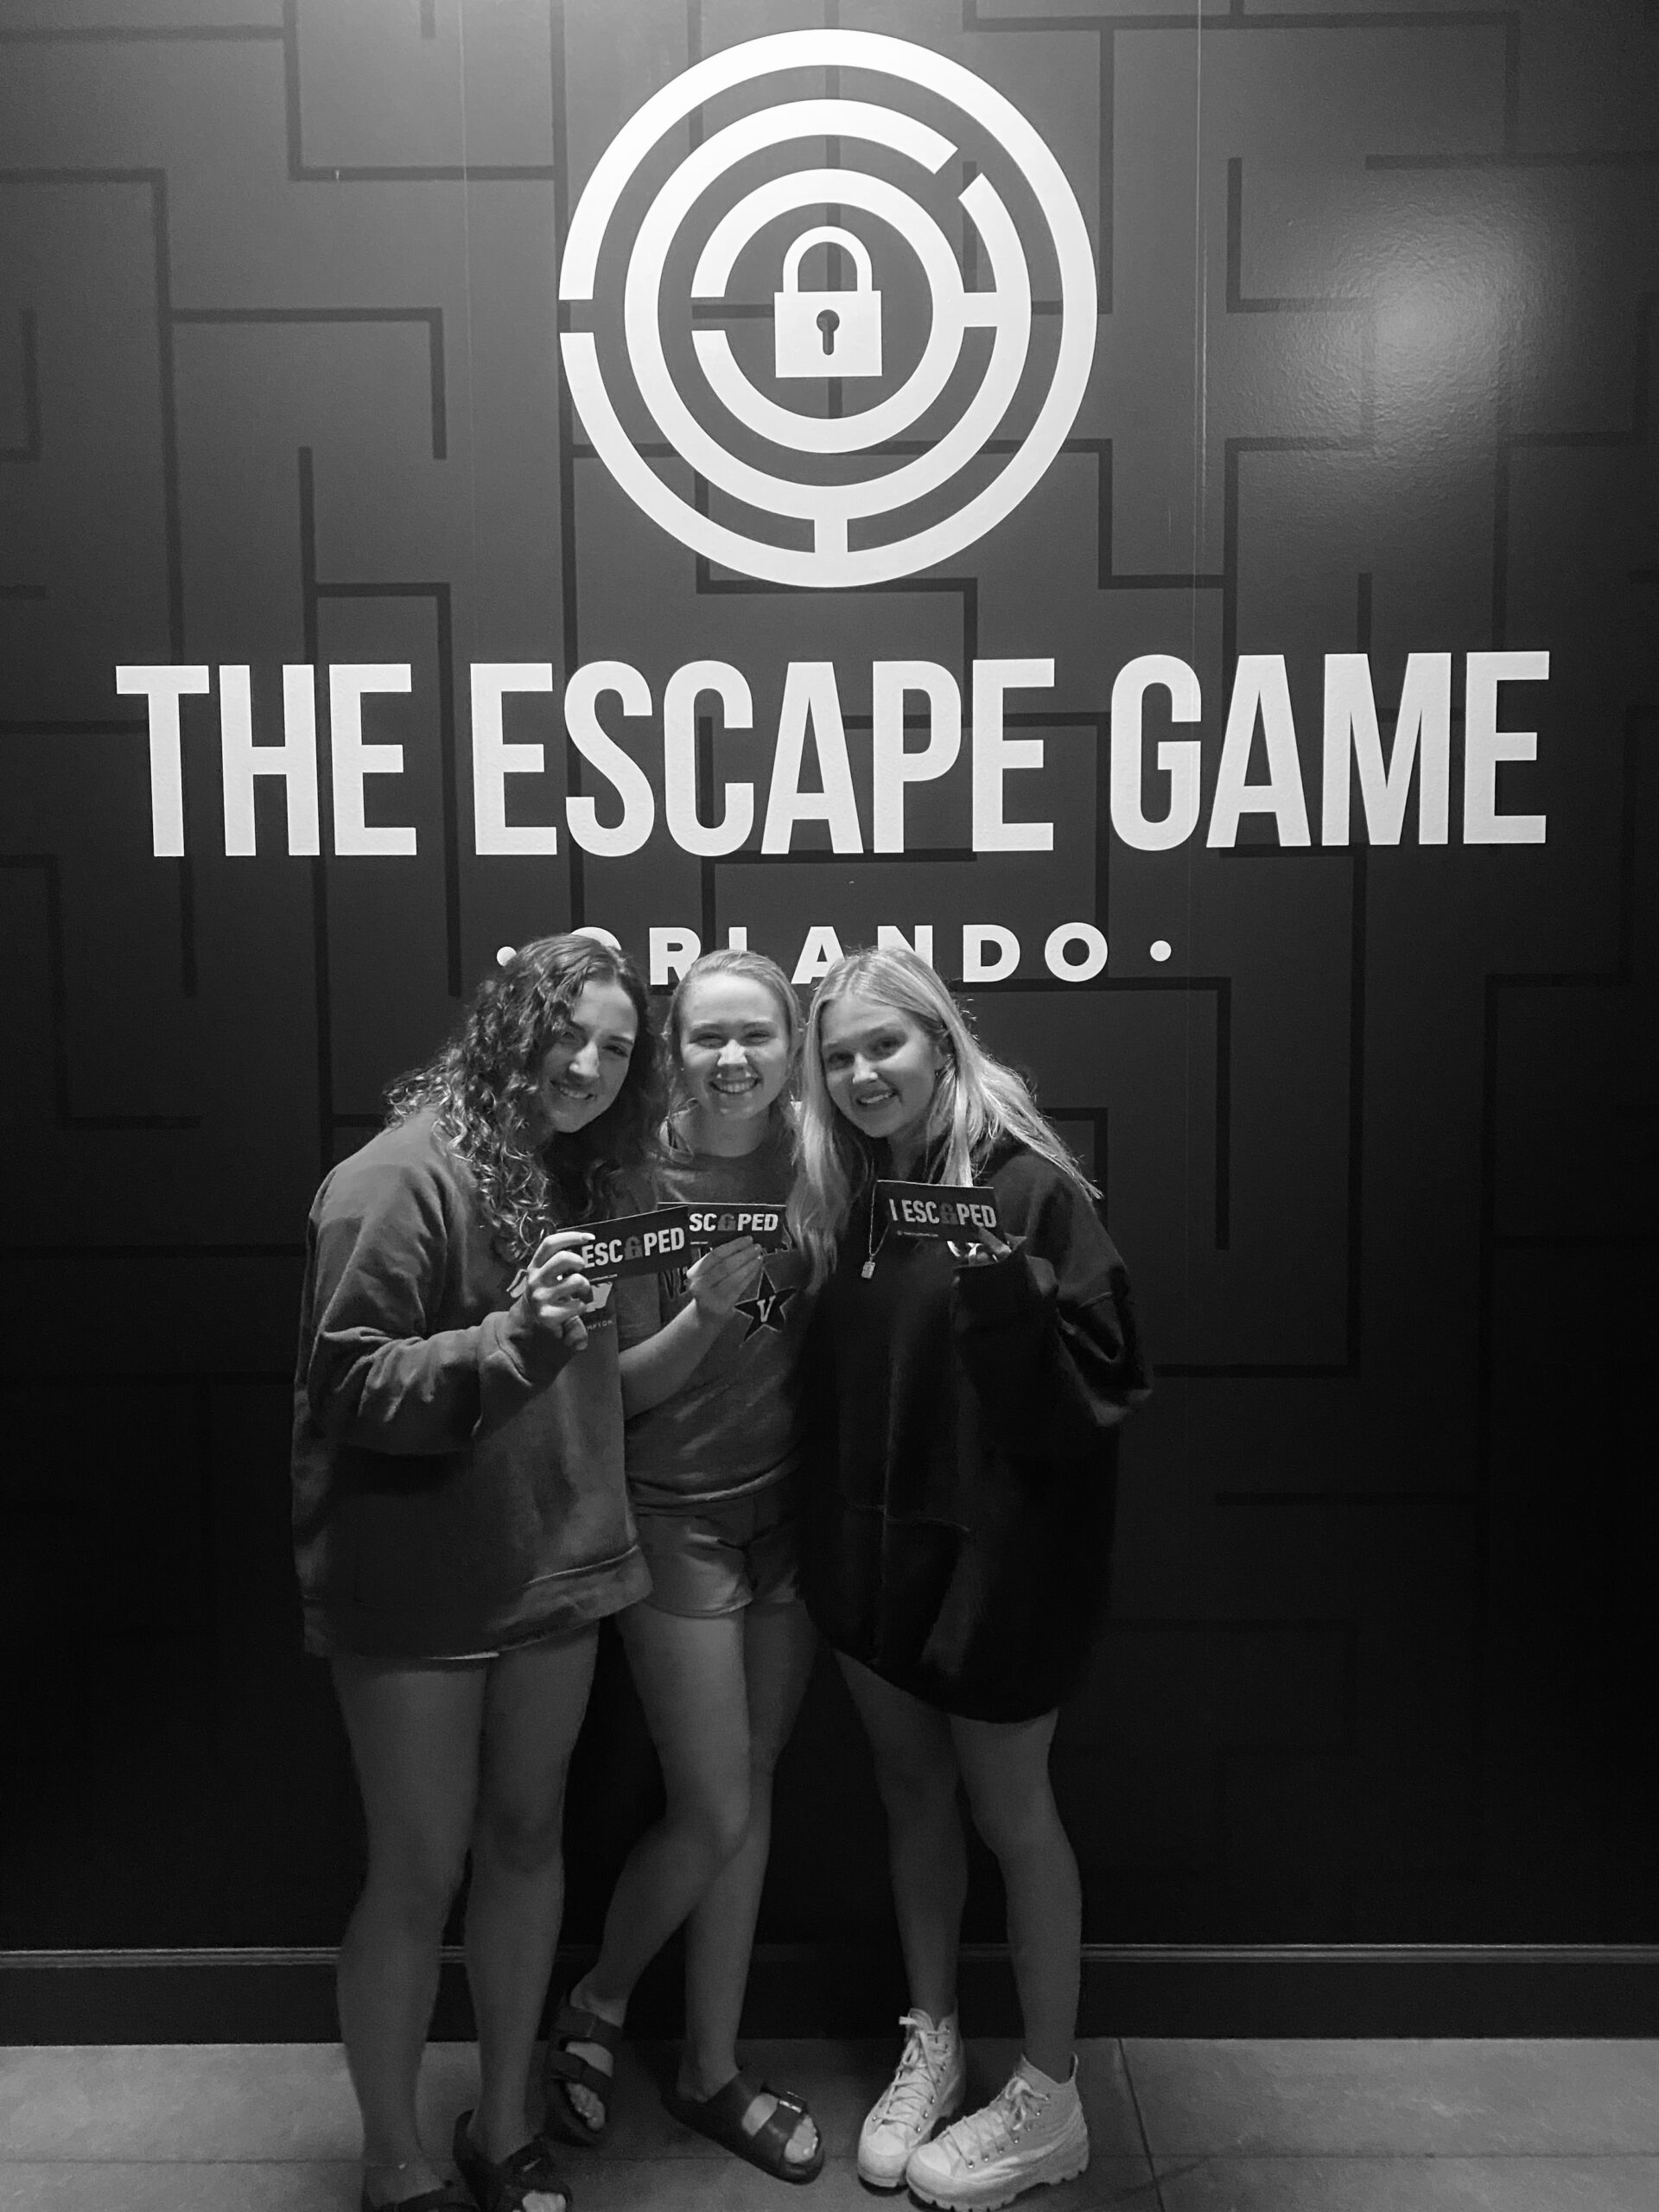 Escape rooms are the best escape